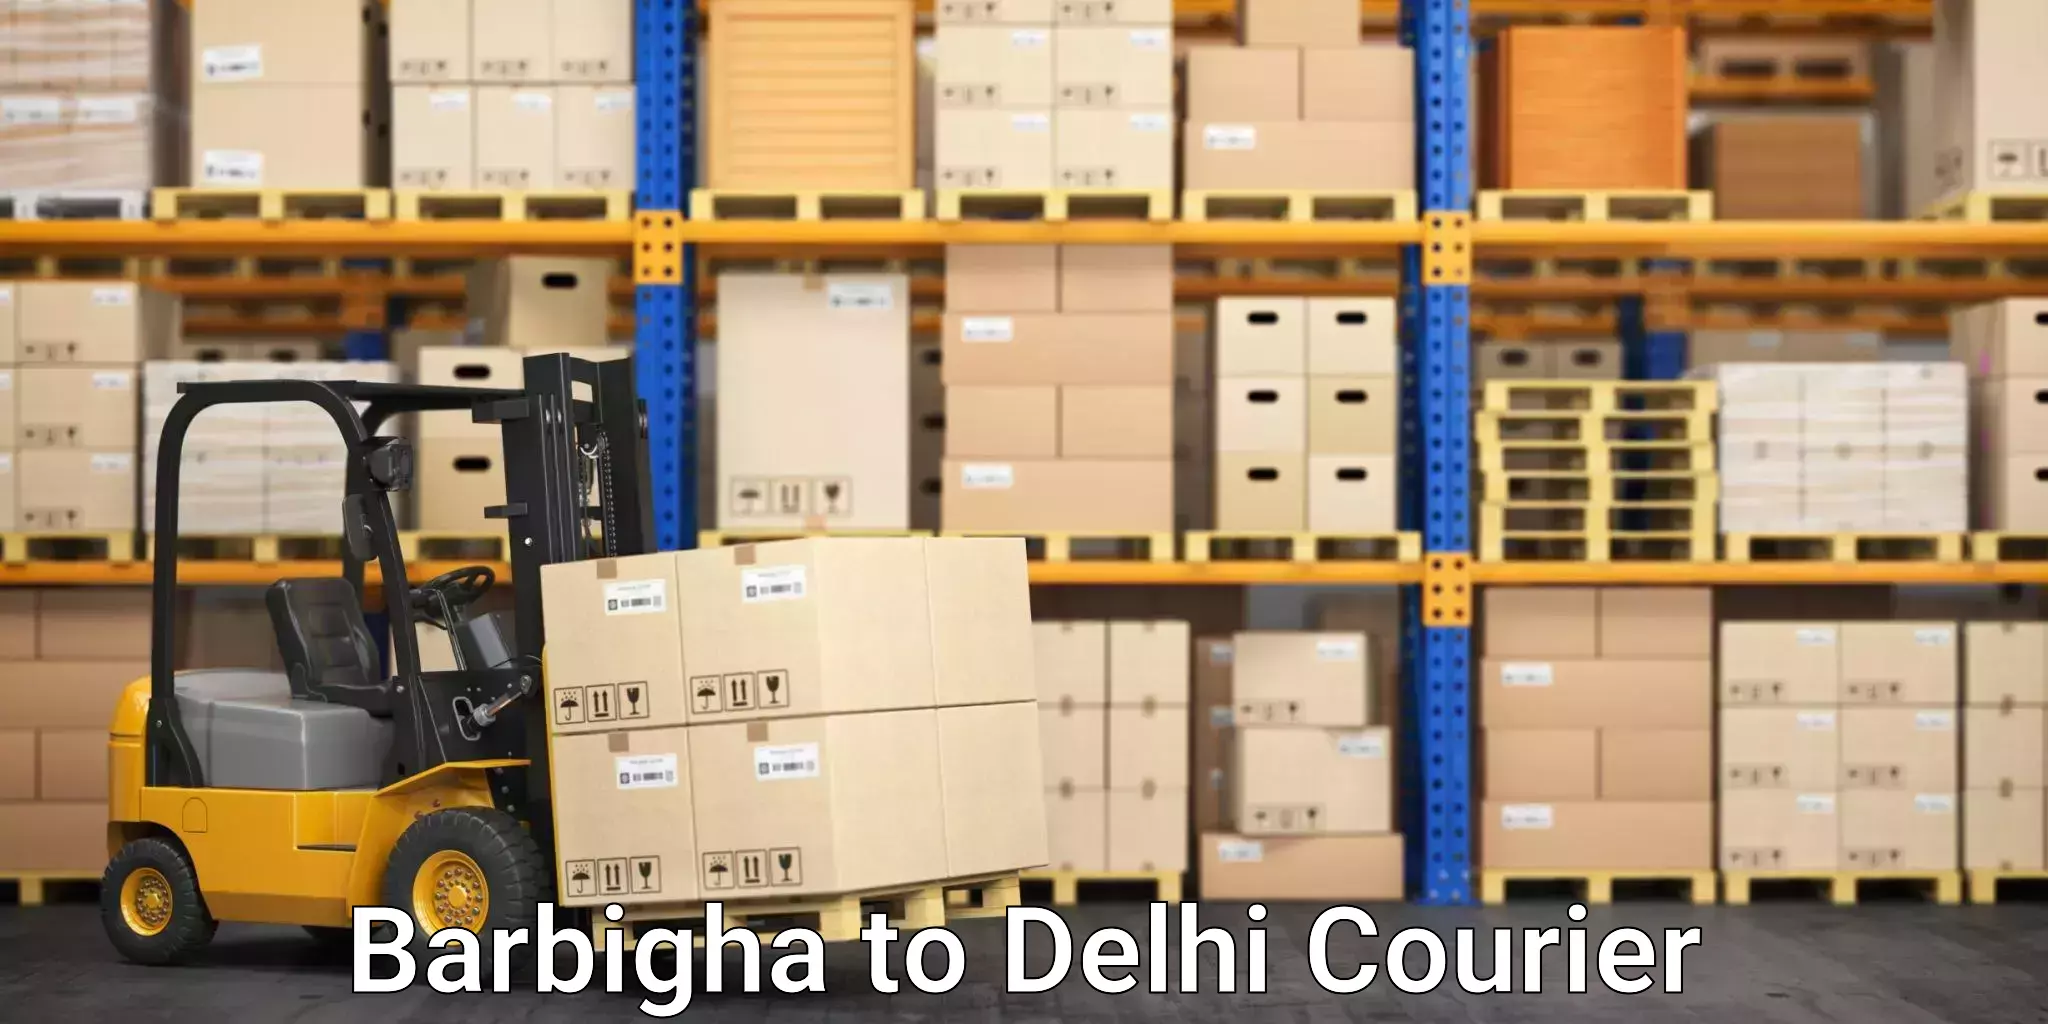 Furniture moving experts Barbigha to East Delhi